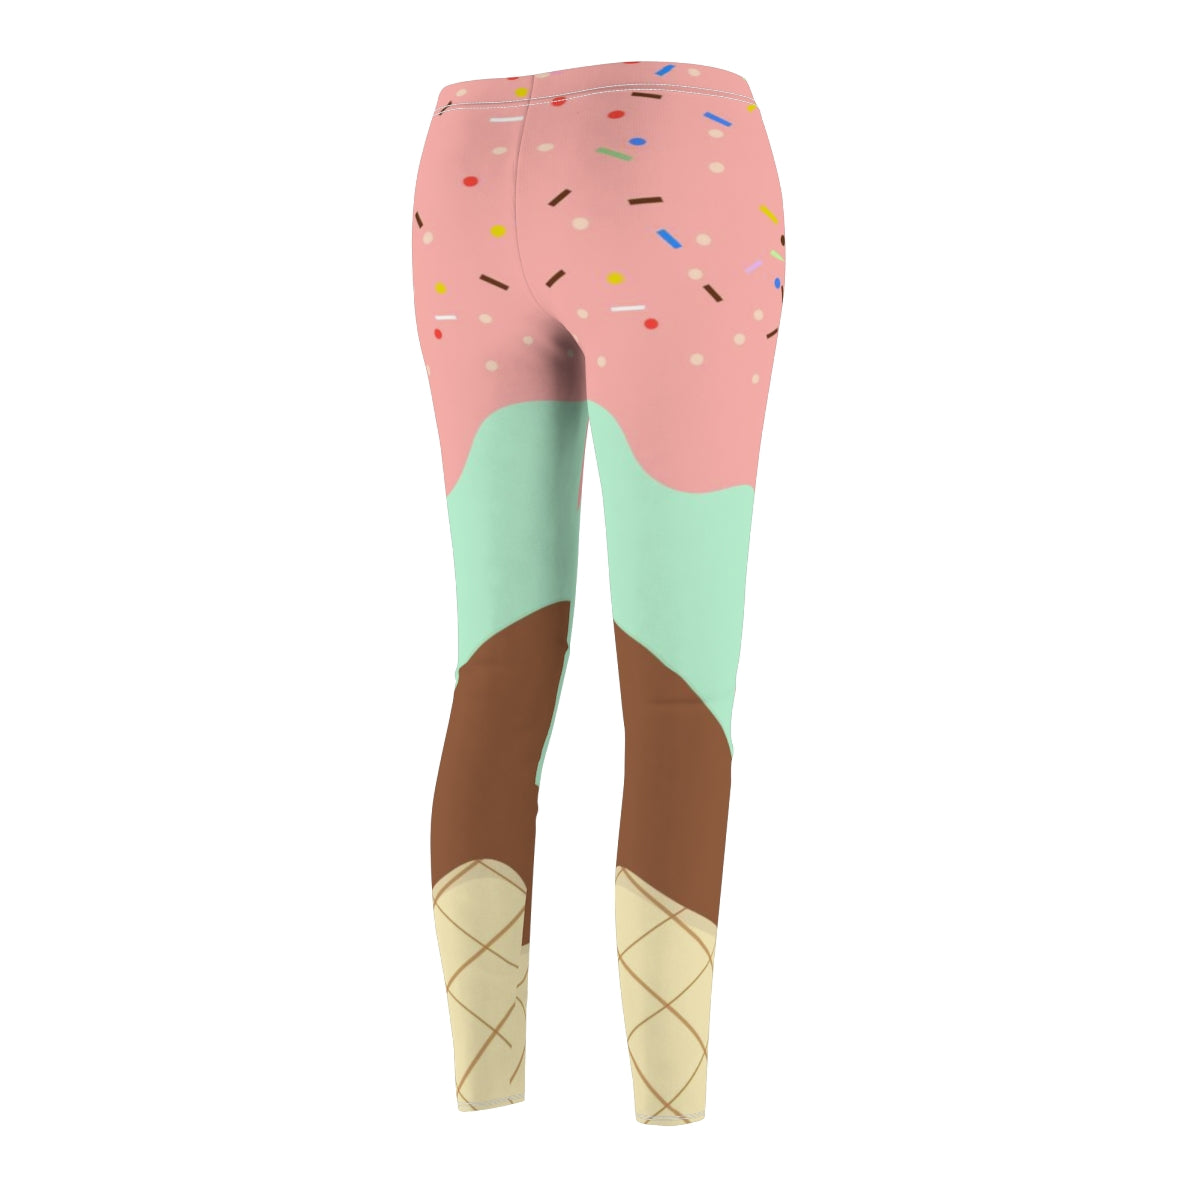 Three Layered Ice Cream Cone Womens Yoga Pants